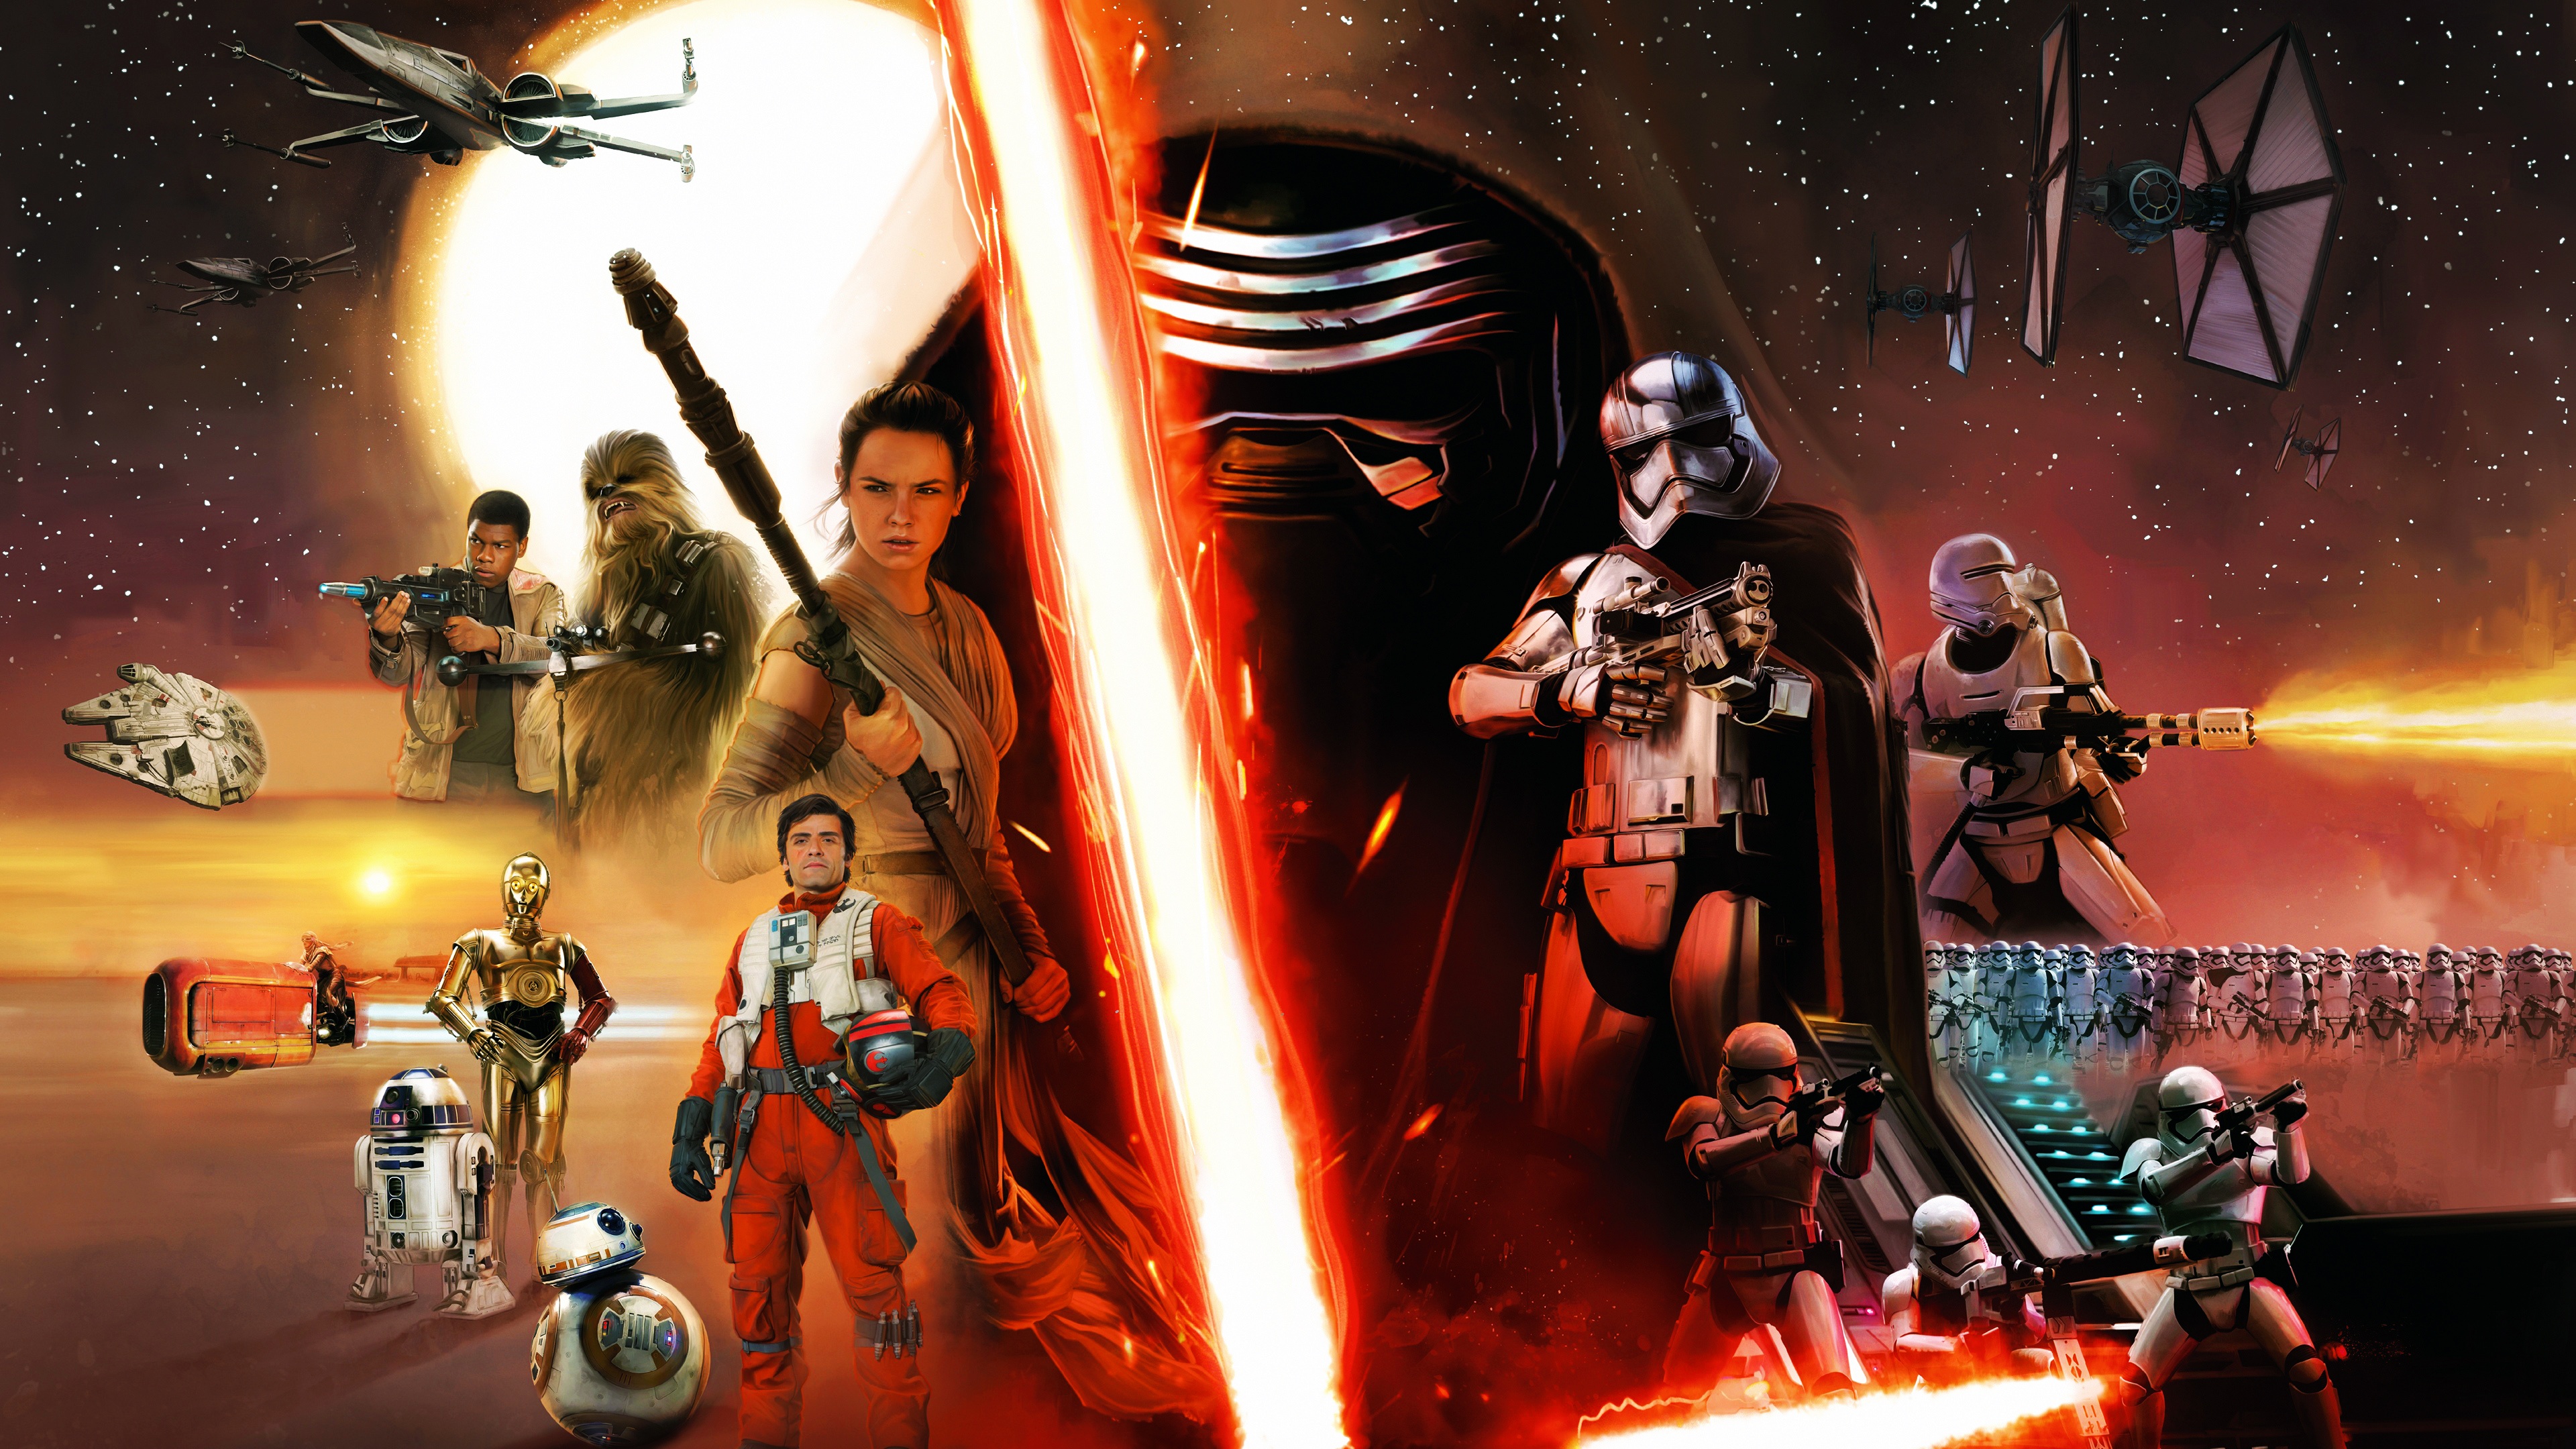 Star Wars Episode Vii The Force Awakens Concept